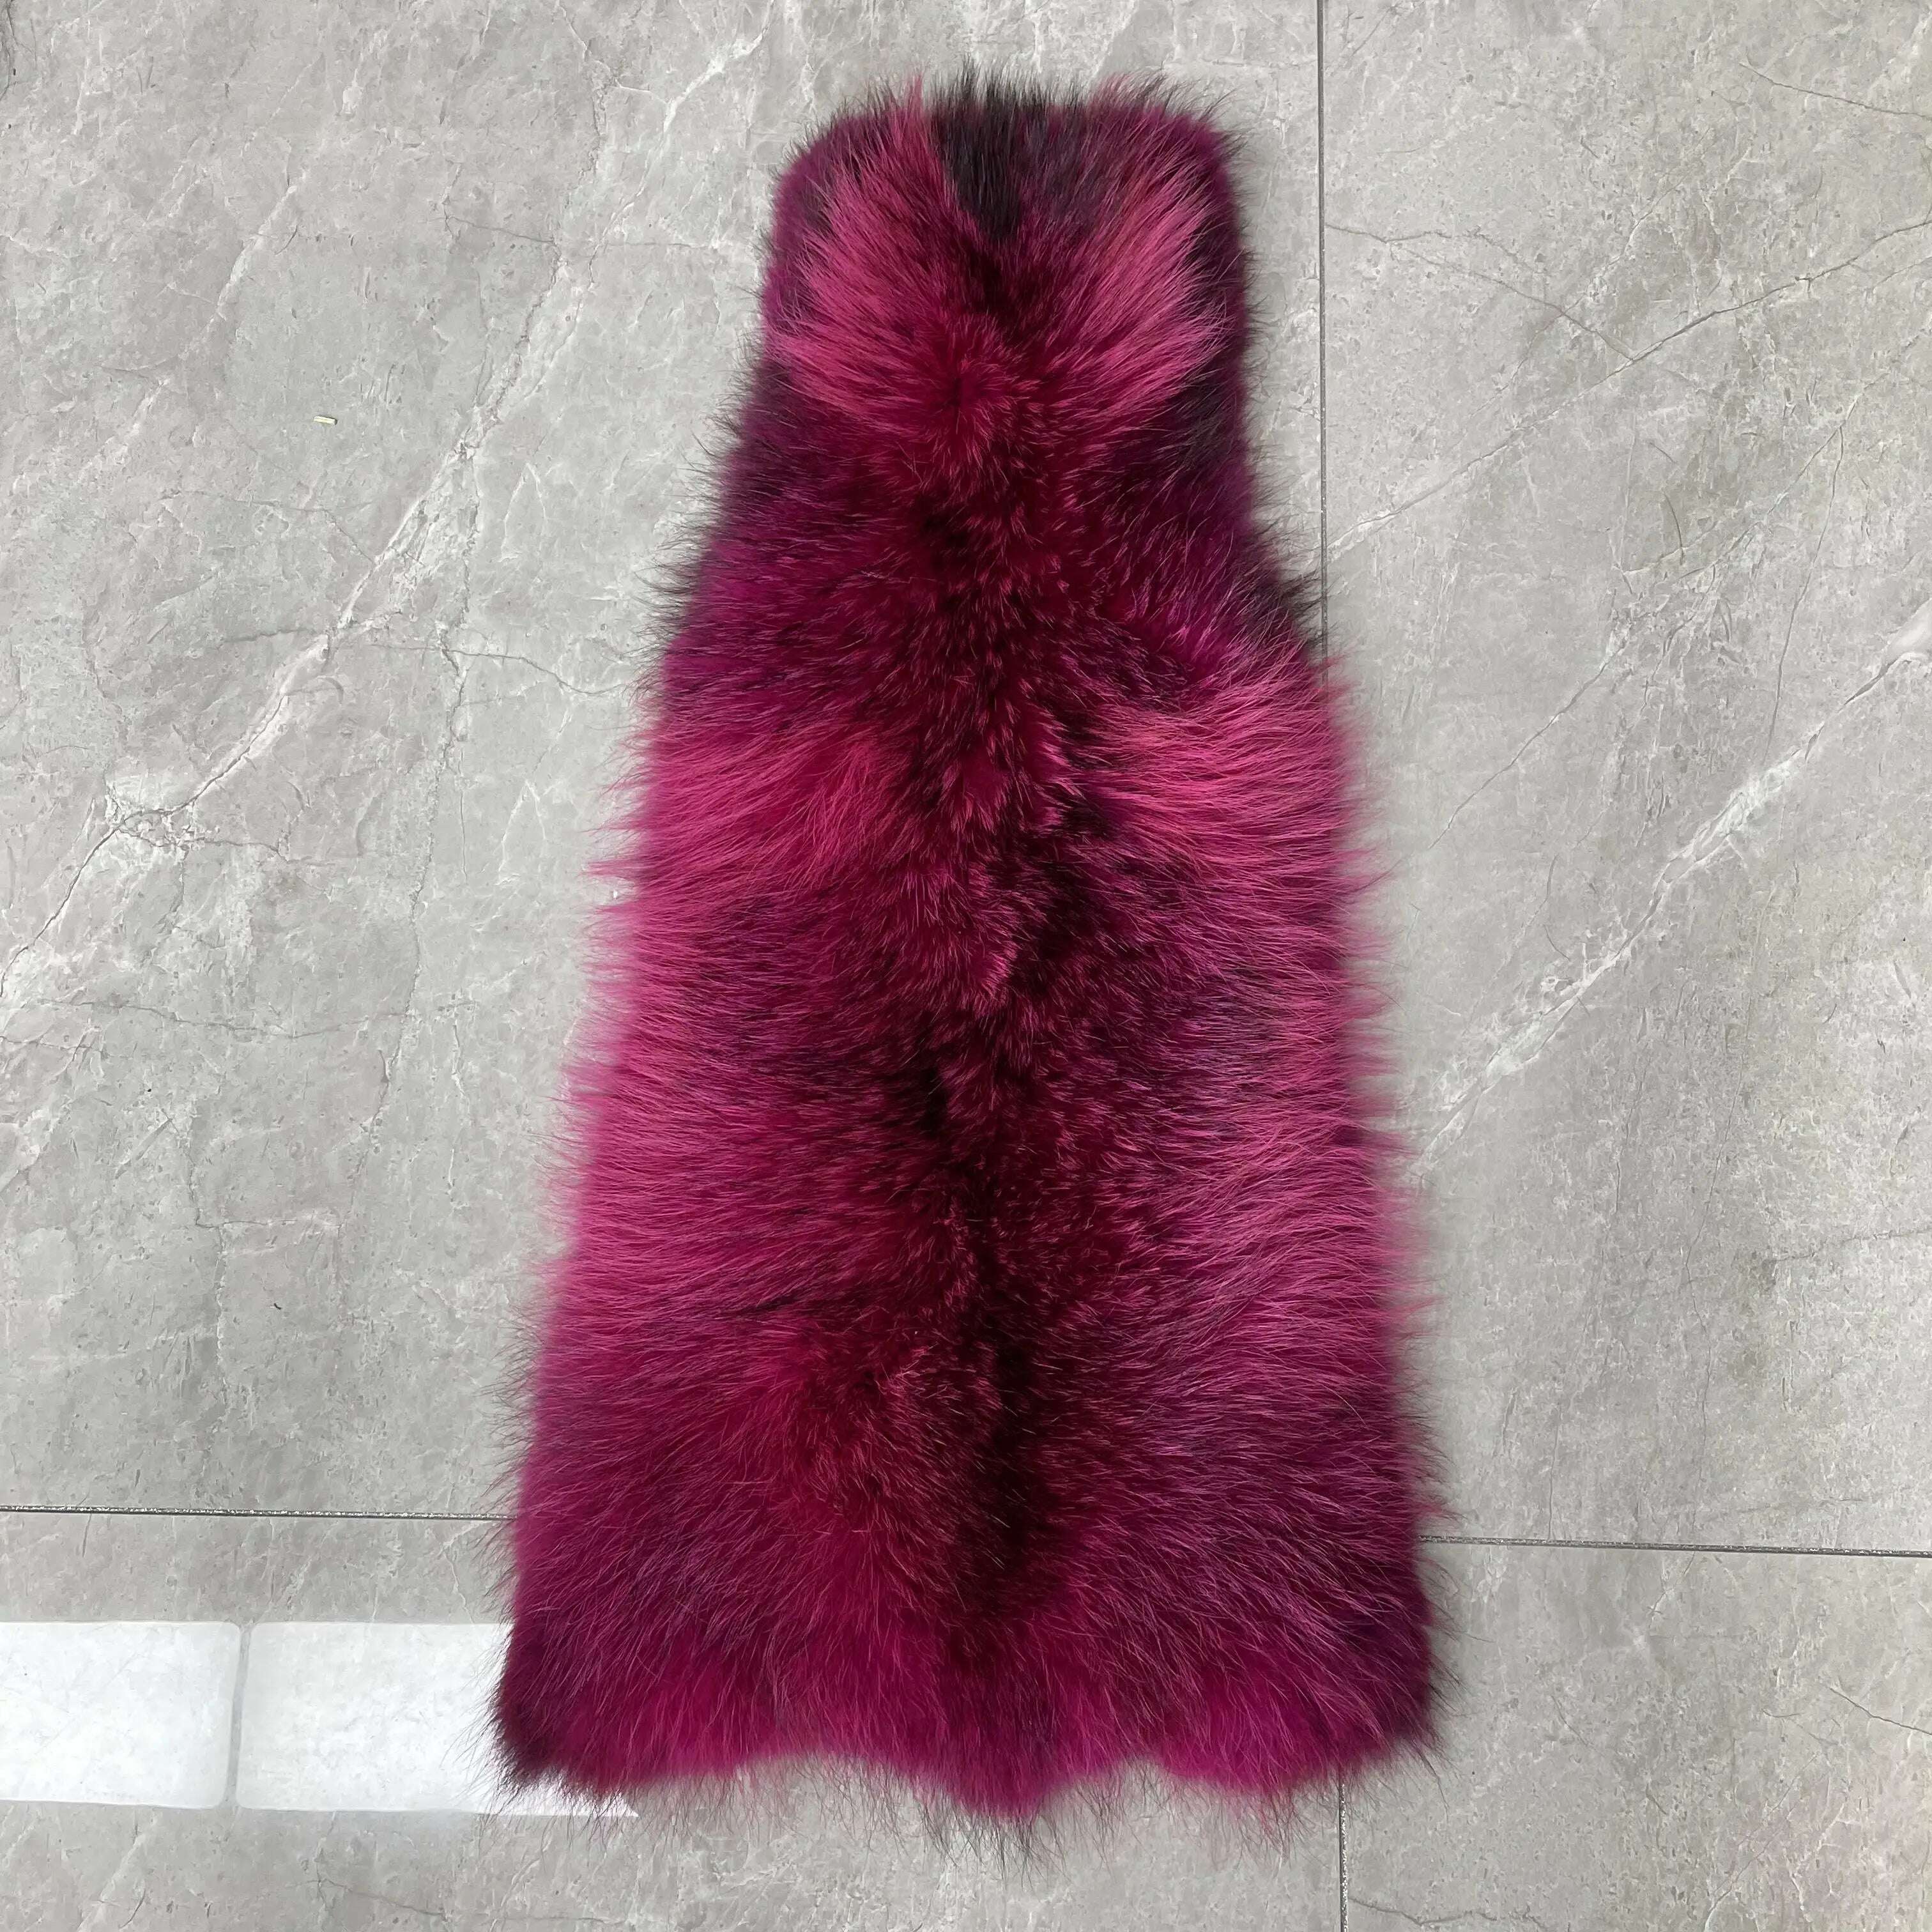 KIMLUD, Wholeskin Men Golden Fox Fur Long Coats Shawl Collar Winter Overcoats Genuine Natural Fox Furs Jacket, Hot Pink / XS(88cm), KIMLUD Women's Clothes